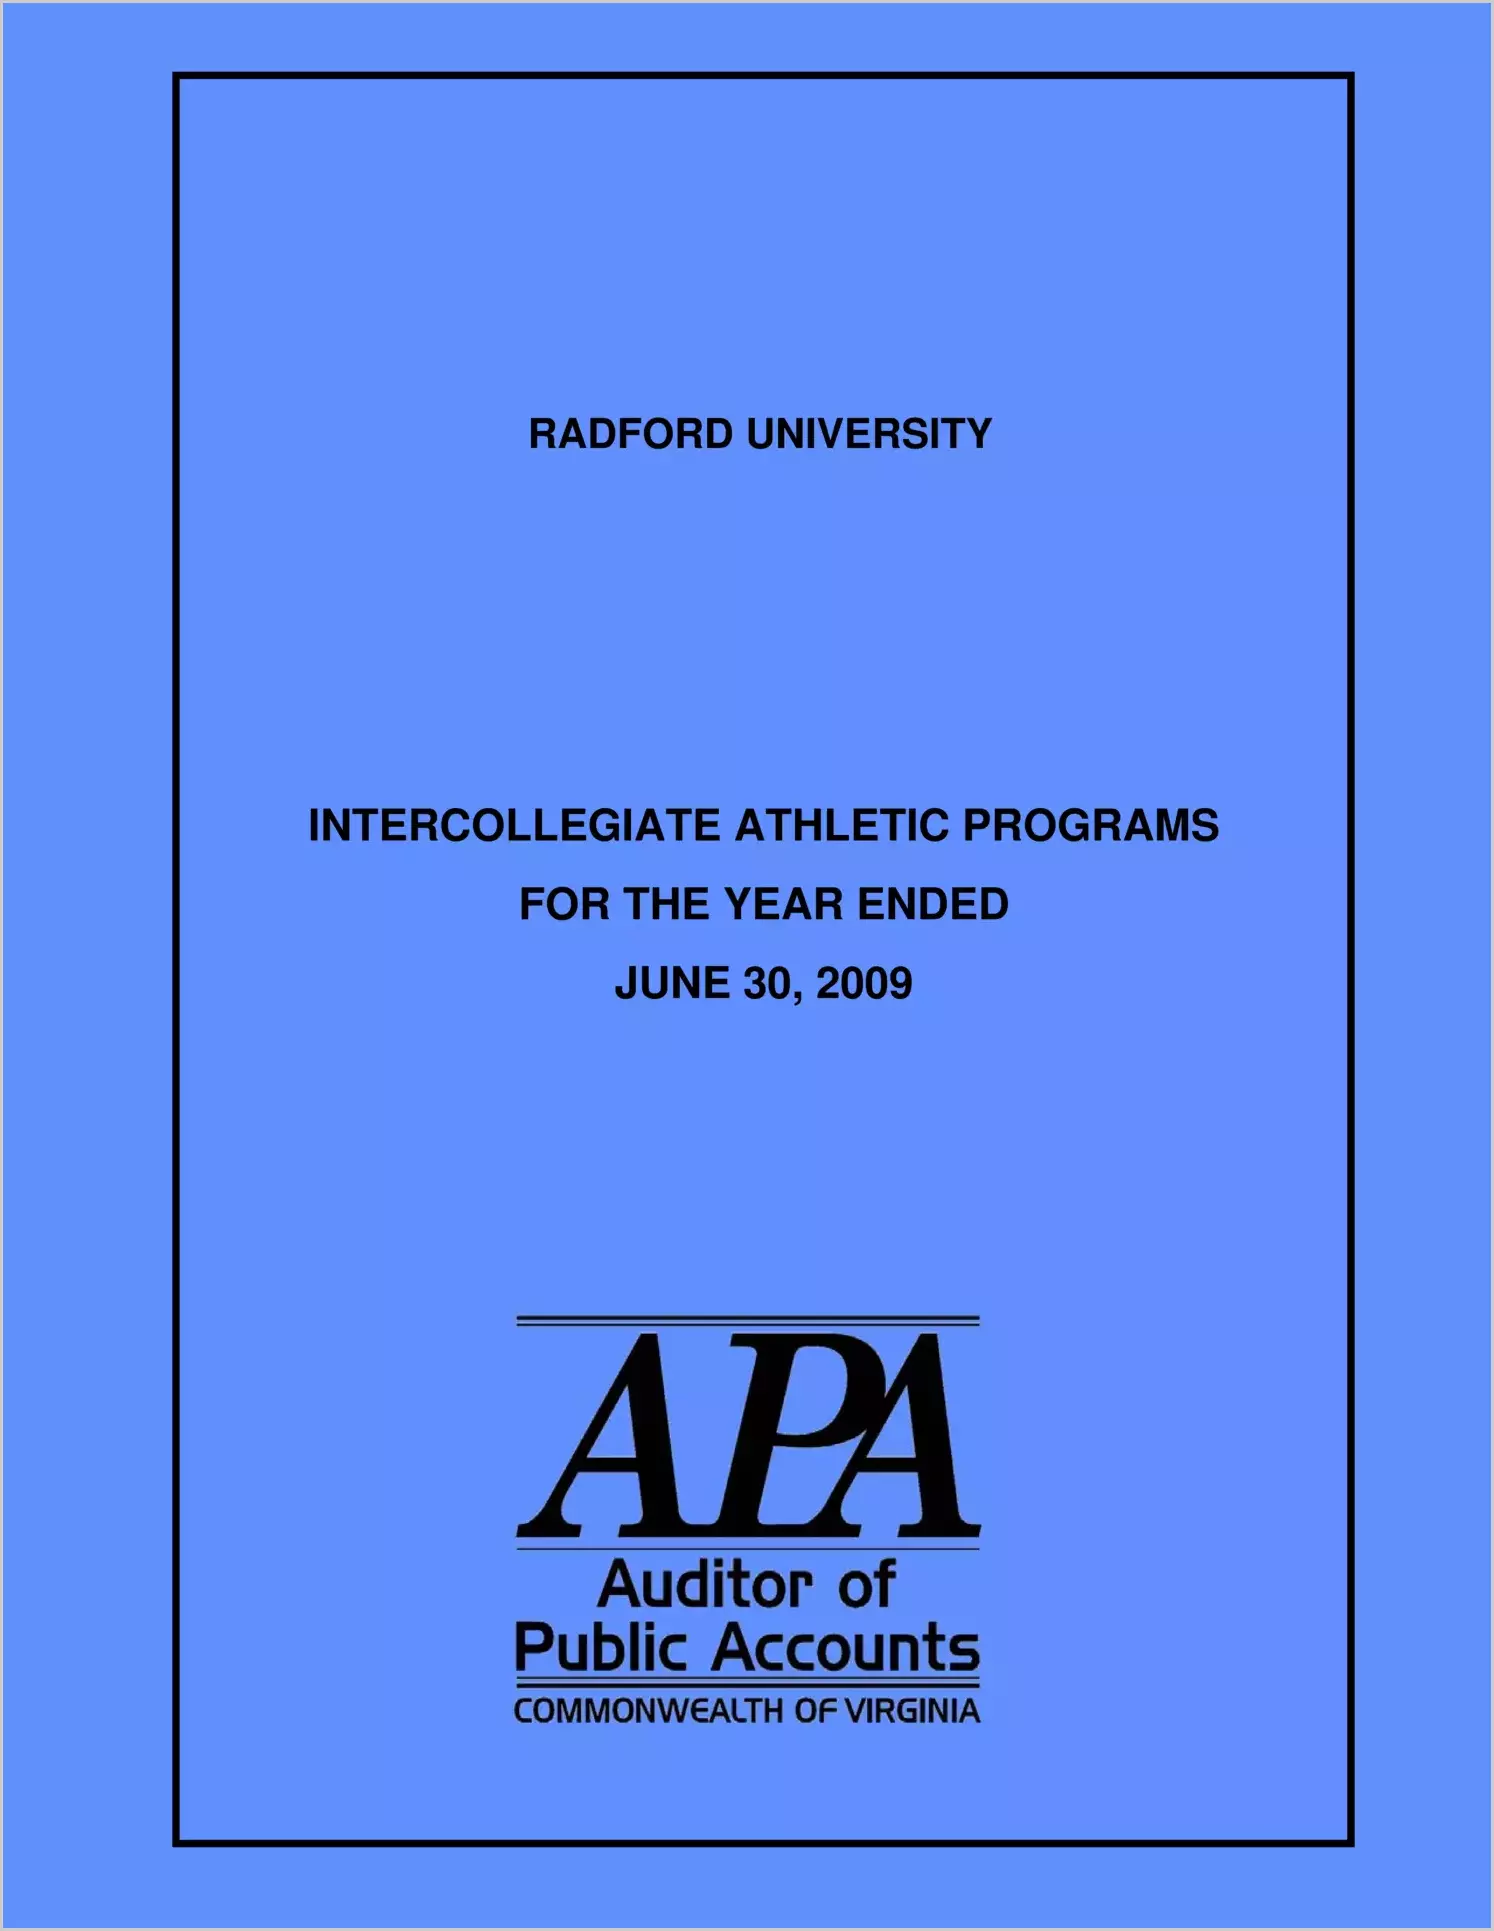 Radford University Intercollegiate Athletics Programs for the year ended June 30, 2009